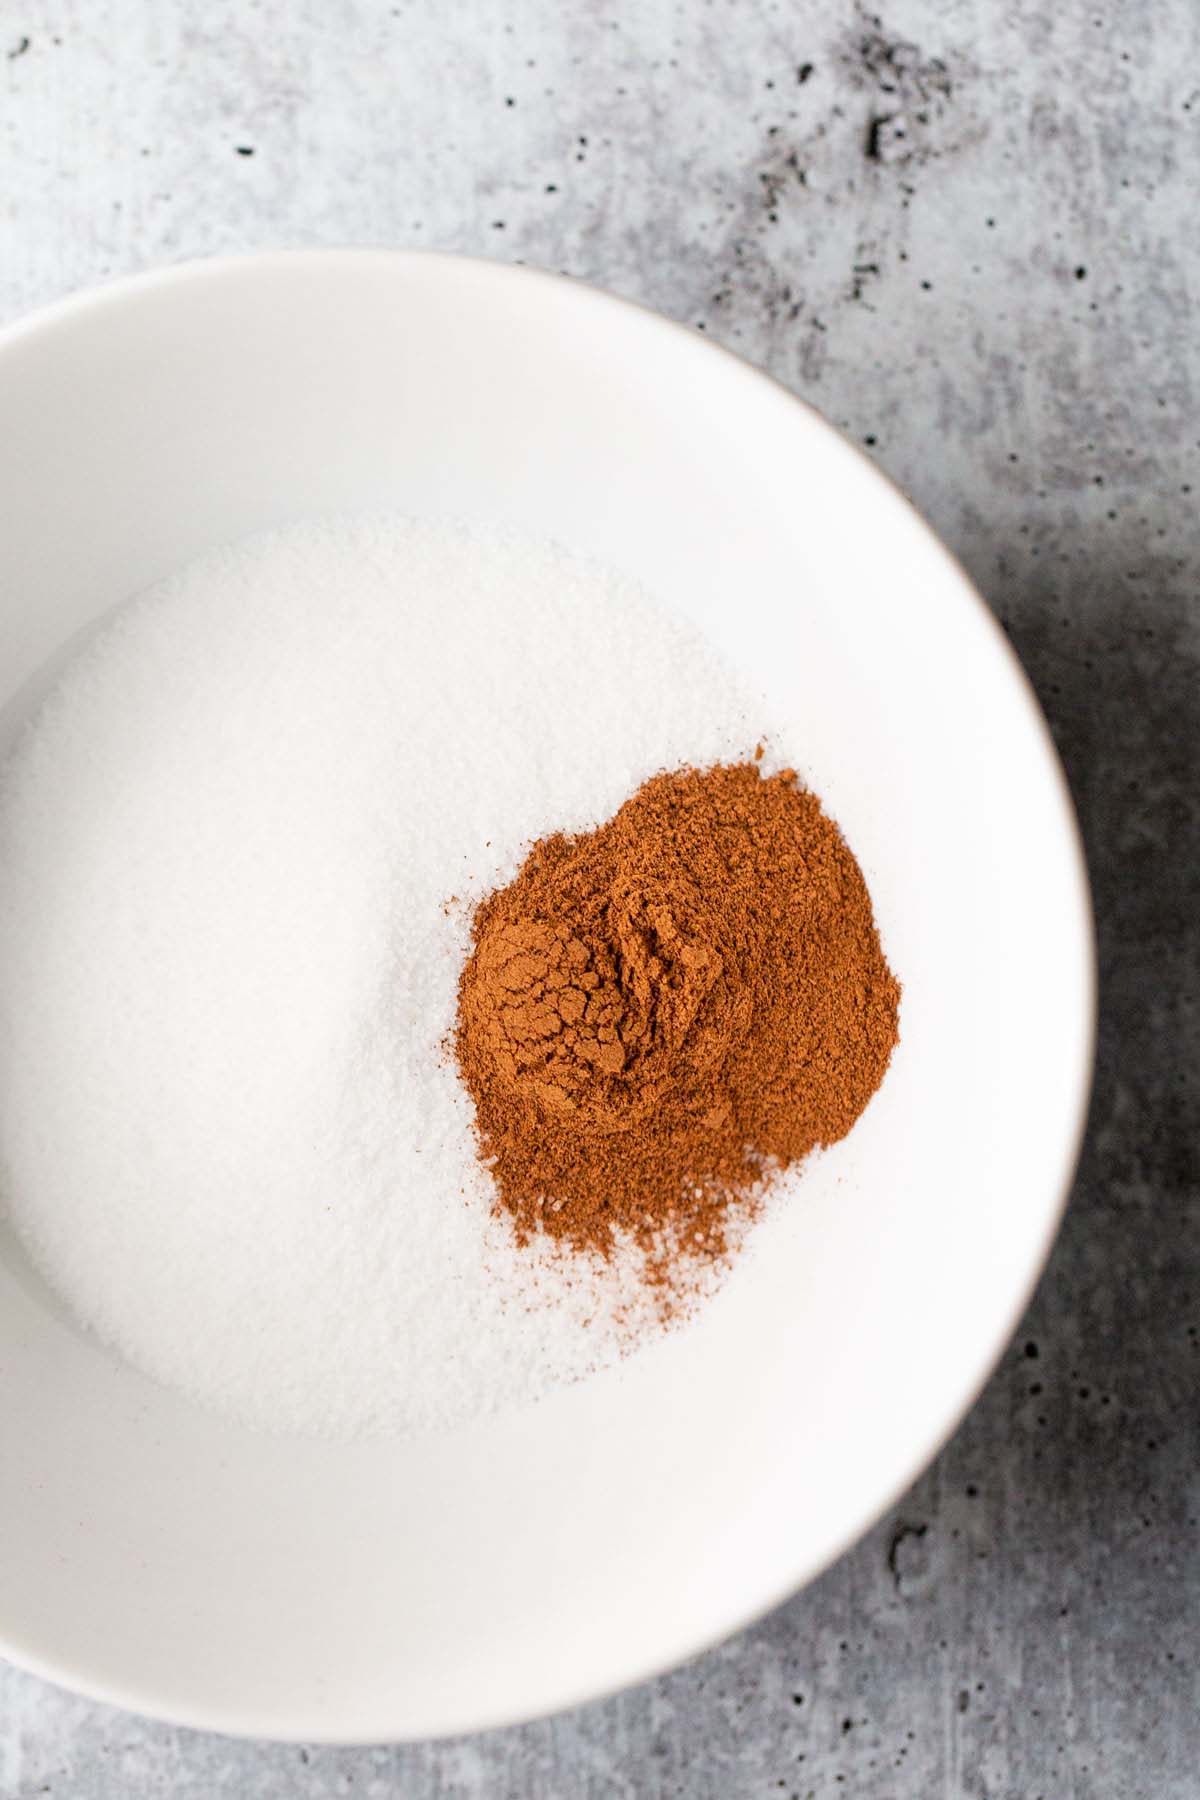 Cinnamon and sugar in a bowl.